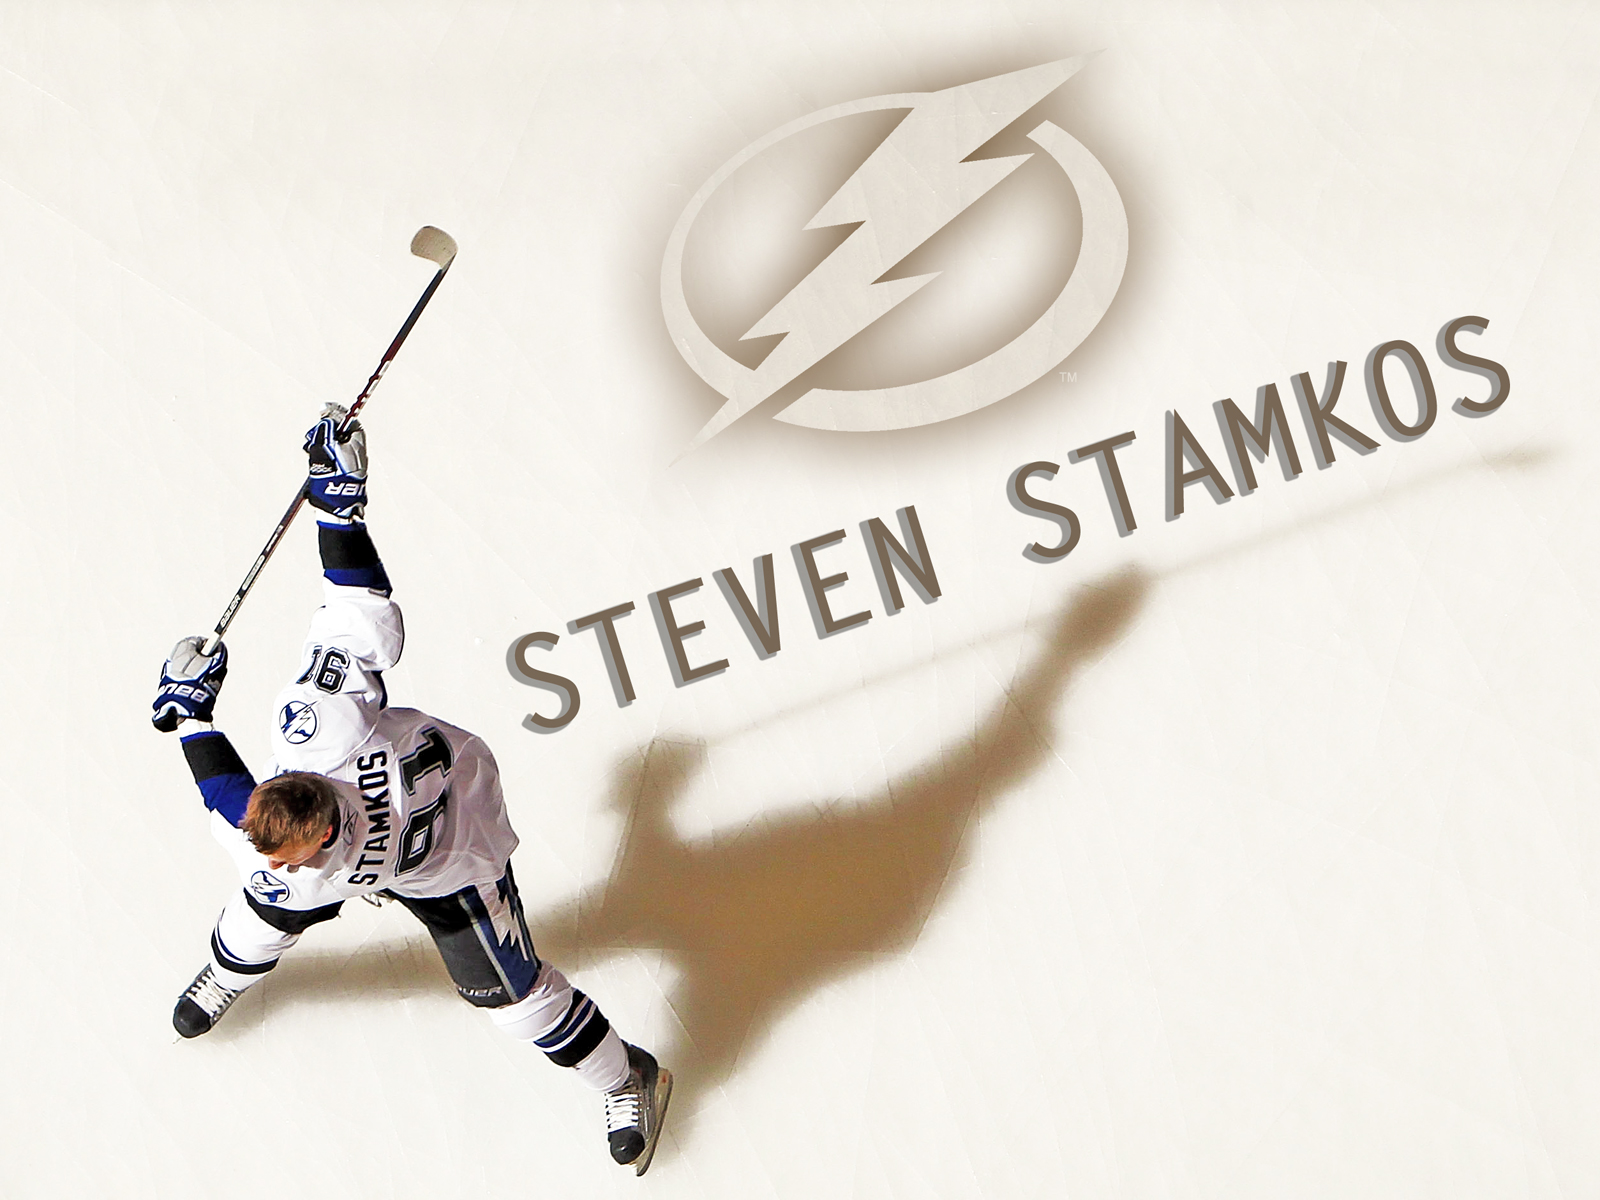 Steven Stamkos Wallpaper - Steven Stamkos Wallpaper (30398687 ...